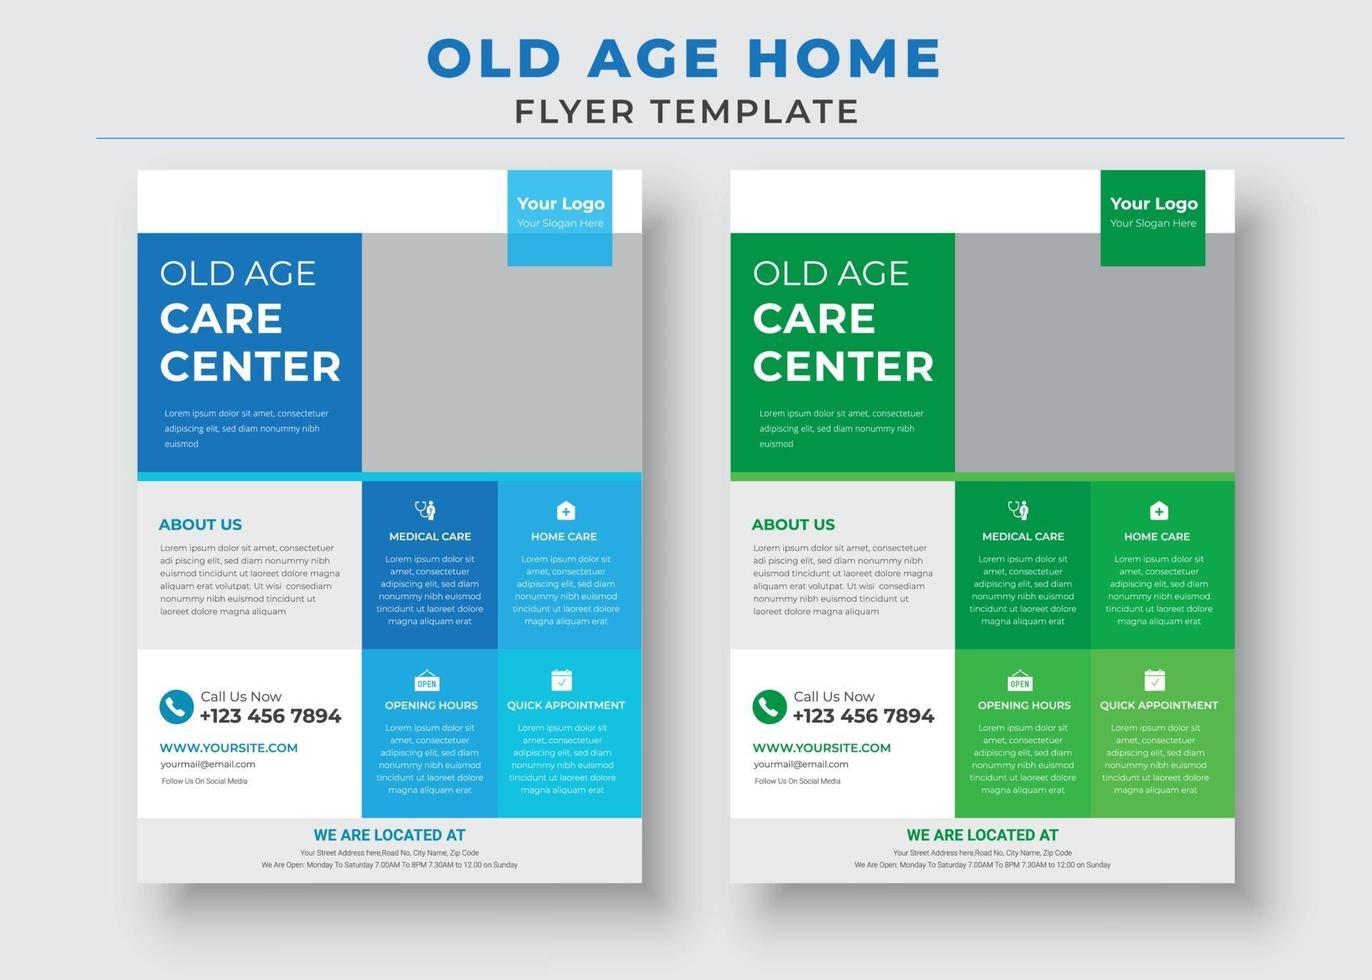 Senior care Flyer template, Best Senior care Home Flyer vector